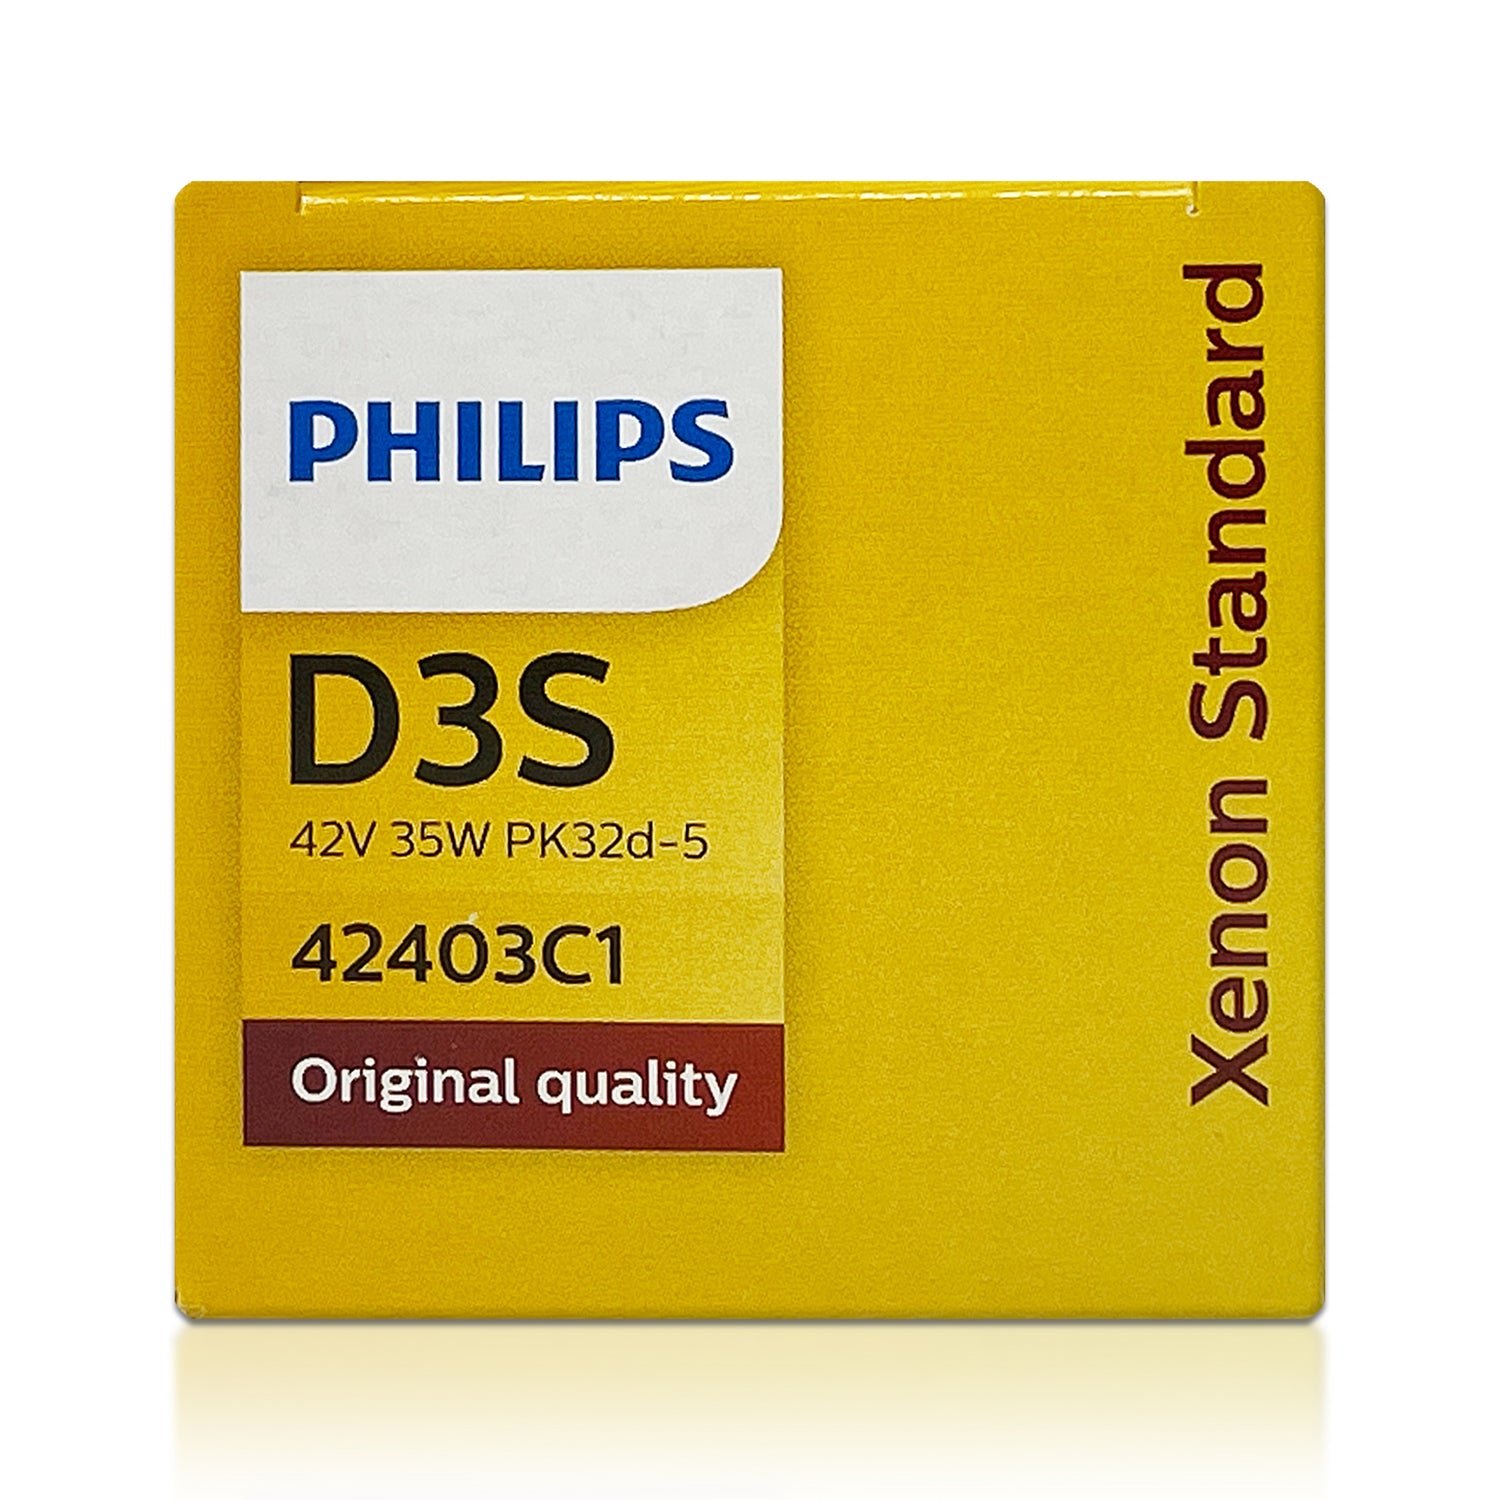 OPENBOX D3S Philips OEM HID Xenon Headlight Bulb 42403C1 DOT 42V 35W  MC202-A